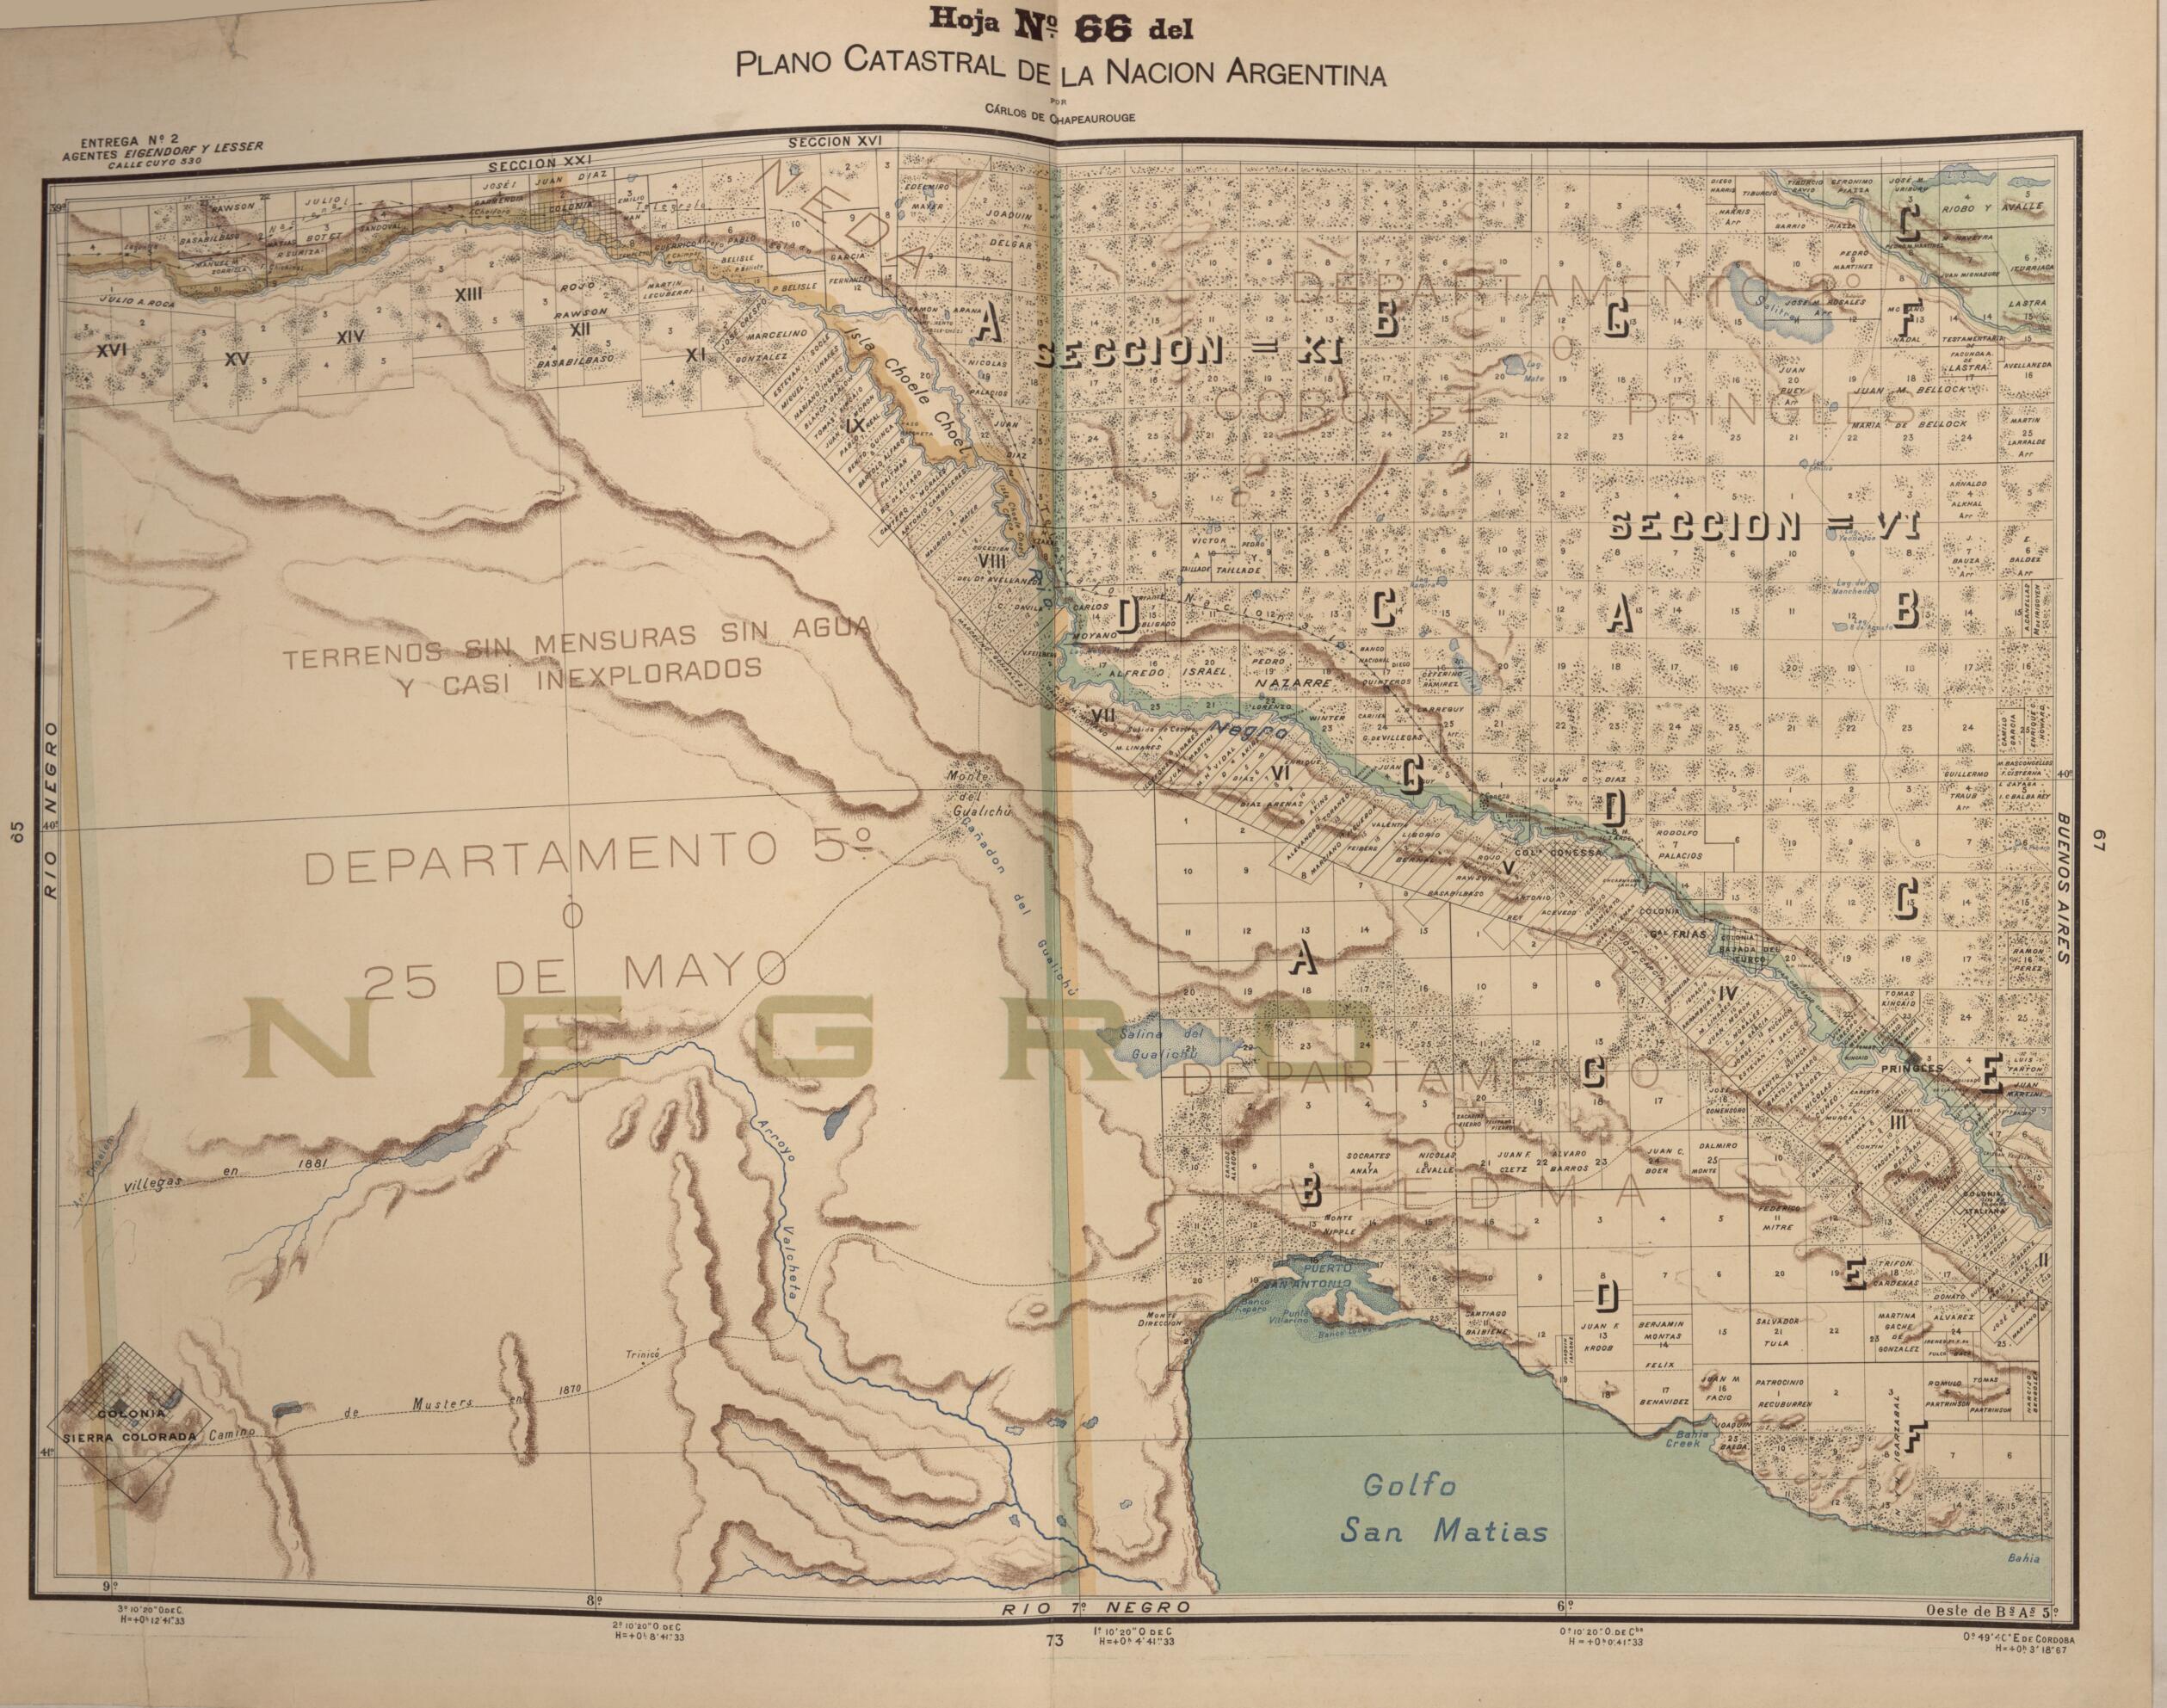 This old map of Plano Catastral De La Nacion Hoja No. 66 from República Argentina from 1905 was created by Carlos De Chapeaurouge in 1905